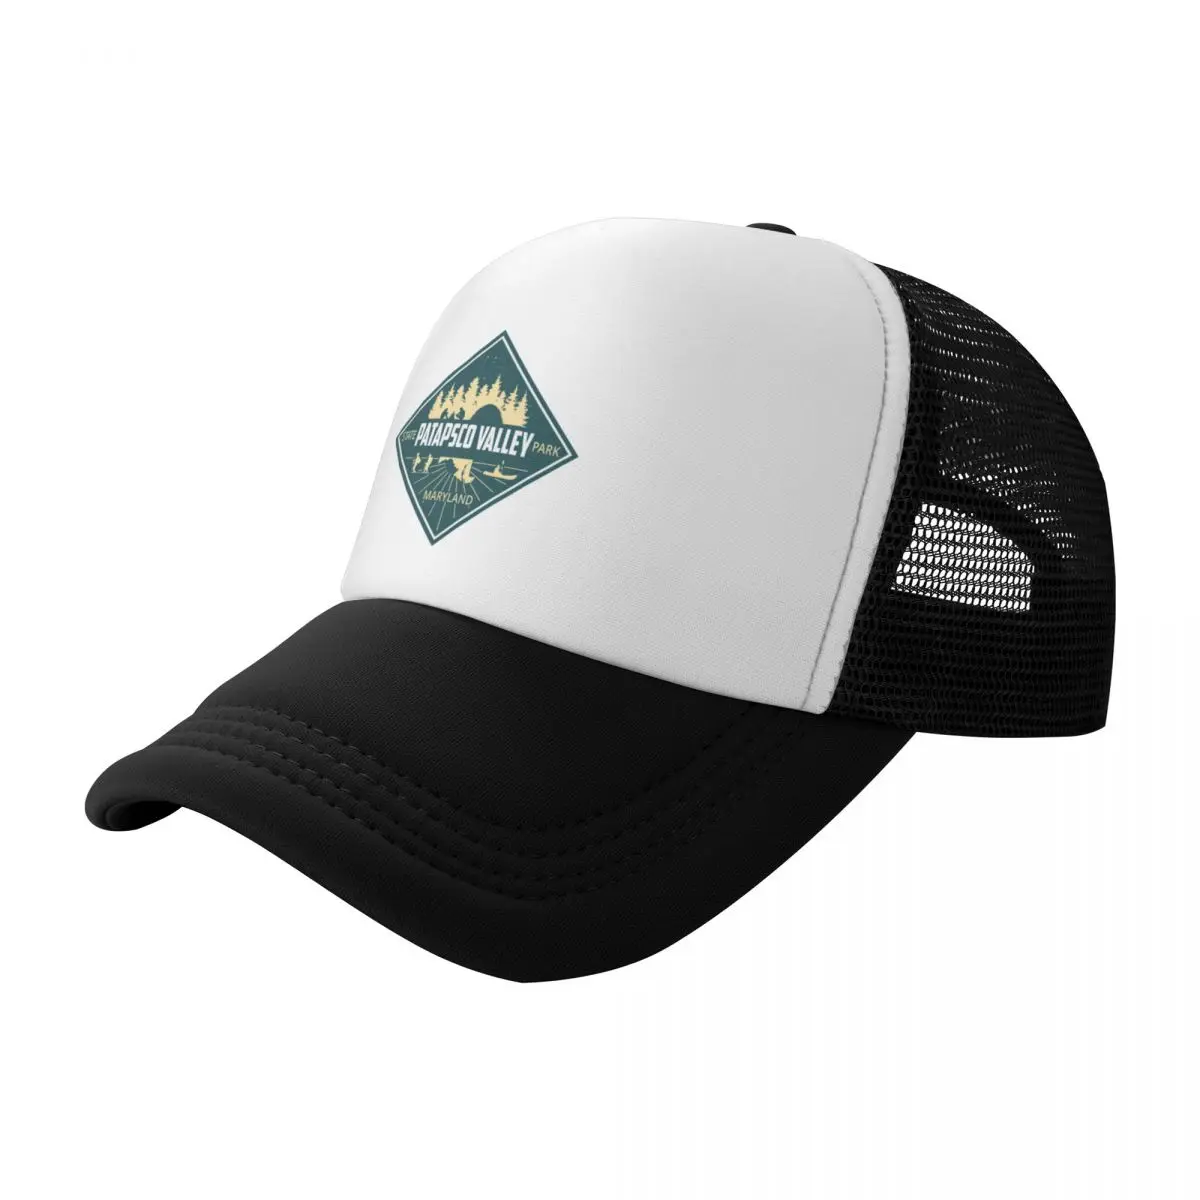 

Patapsco Valley State Park Diamond Logo Baseball Cap |-F-| Mountaineering Golf Cap hard hat Trucker Hats For Men Women's